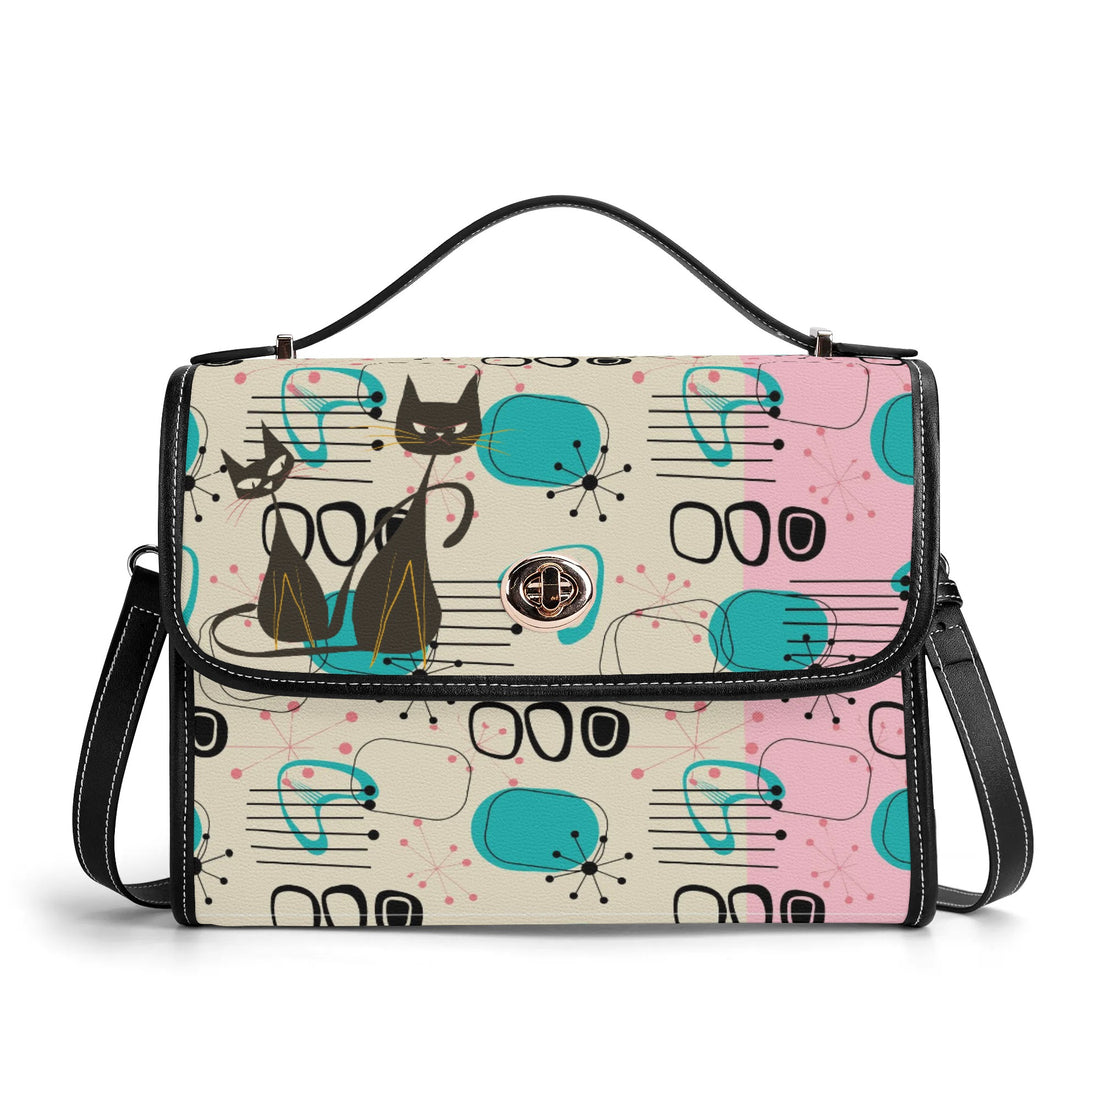 Mid Century Modern Atomic Cat Satchel, Retro Pink, Turquoise, and Black PU Leather Handbag